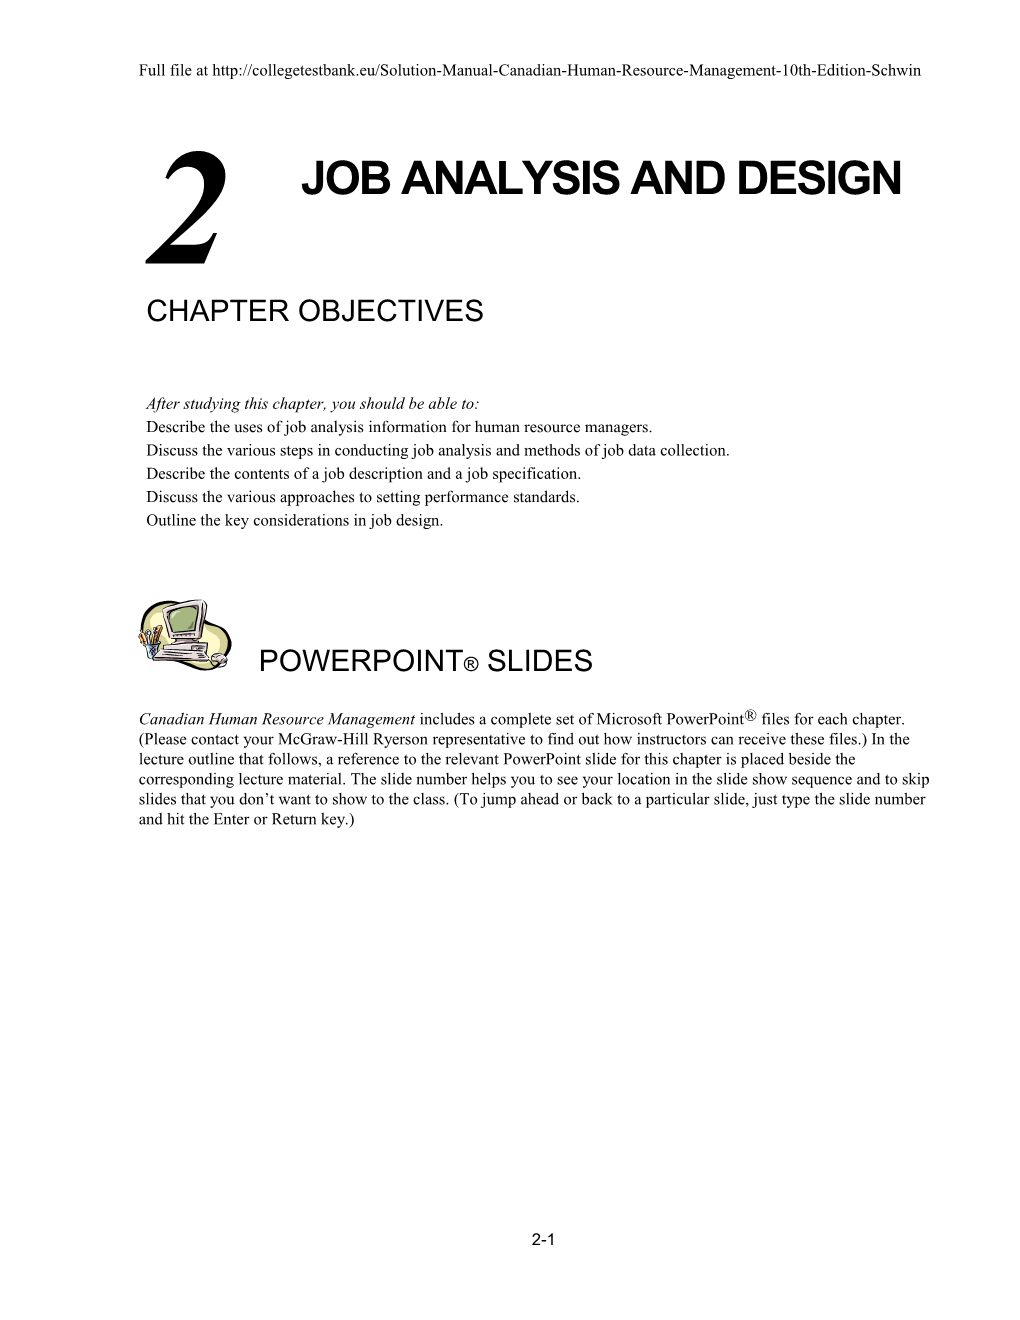 Job Analysis and Design